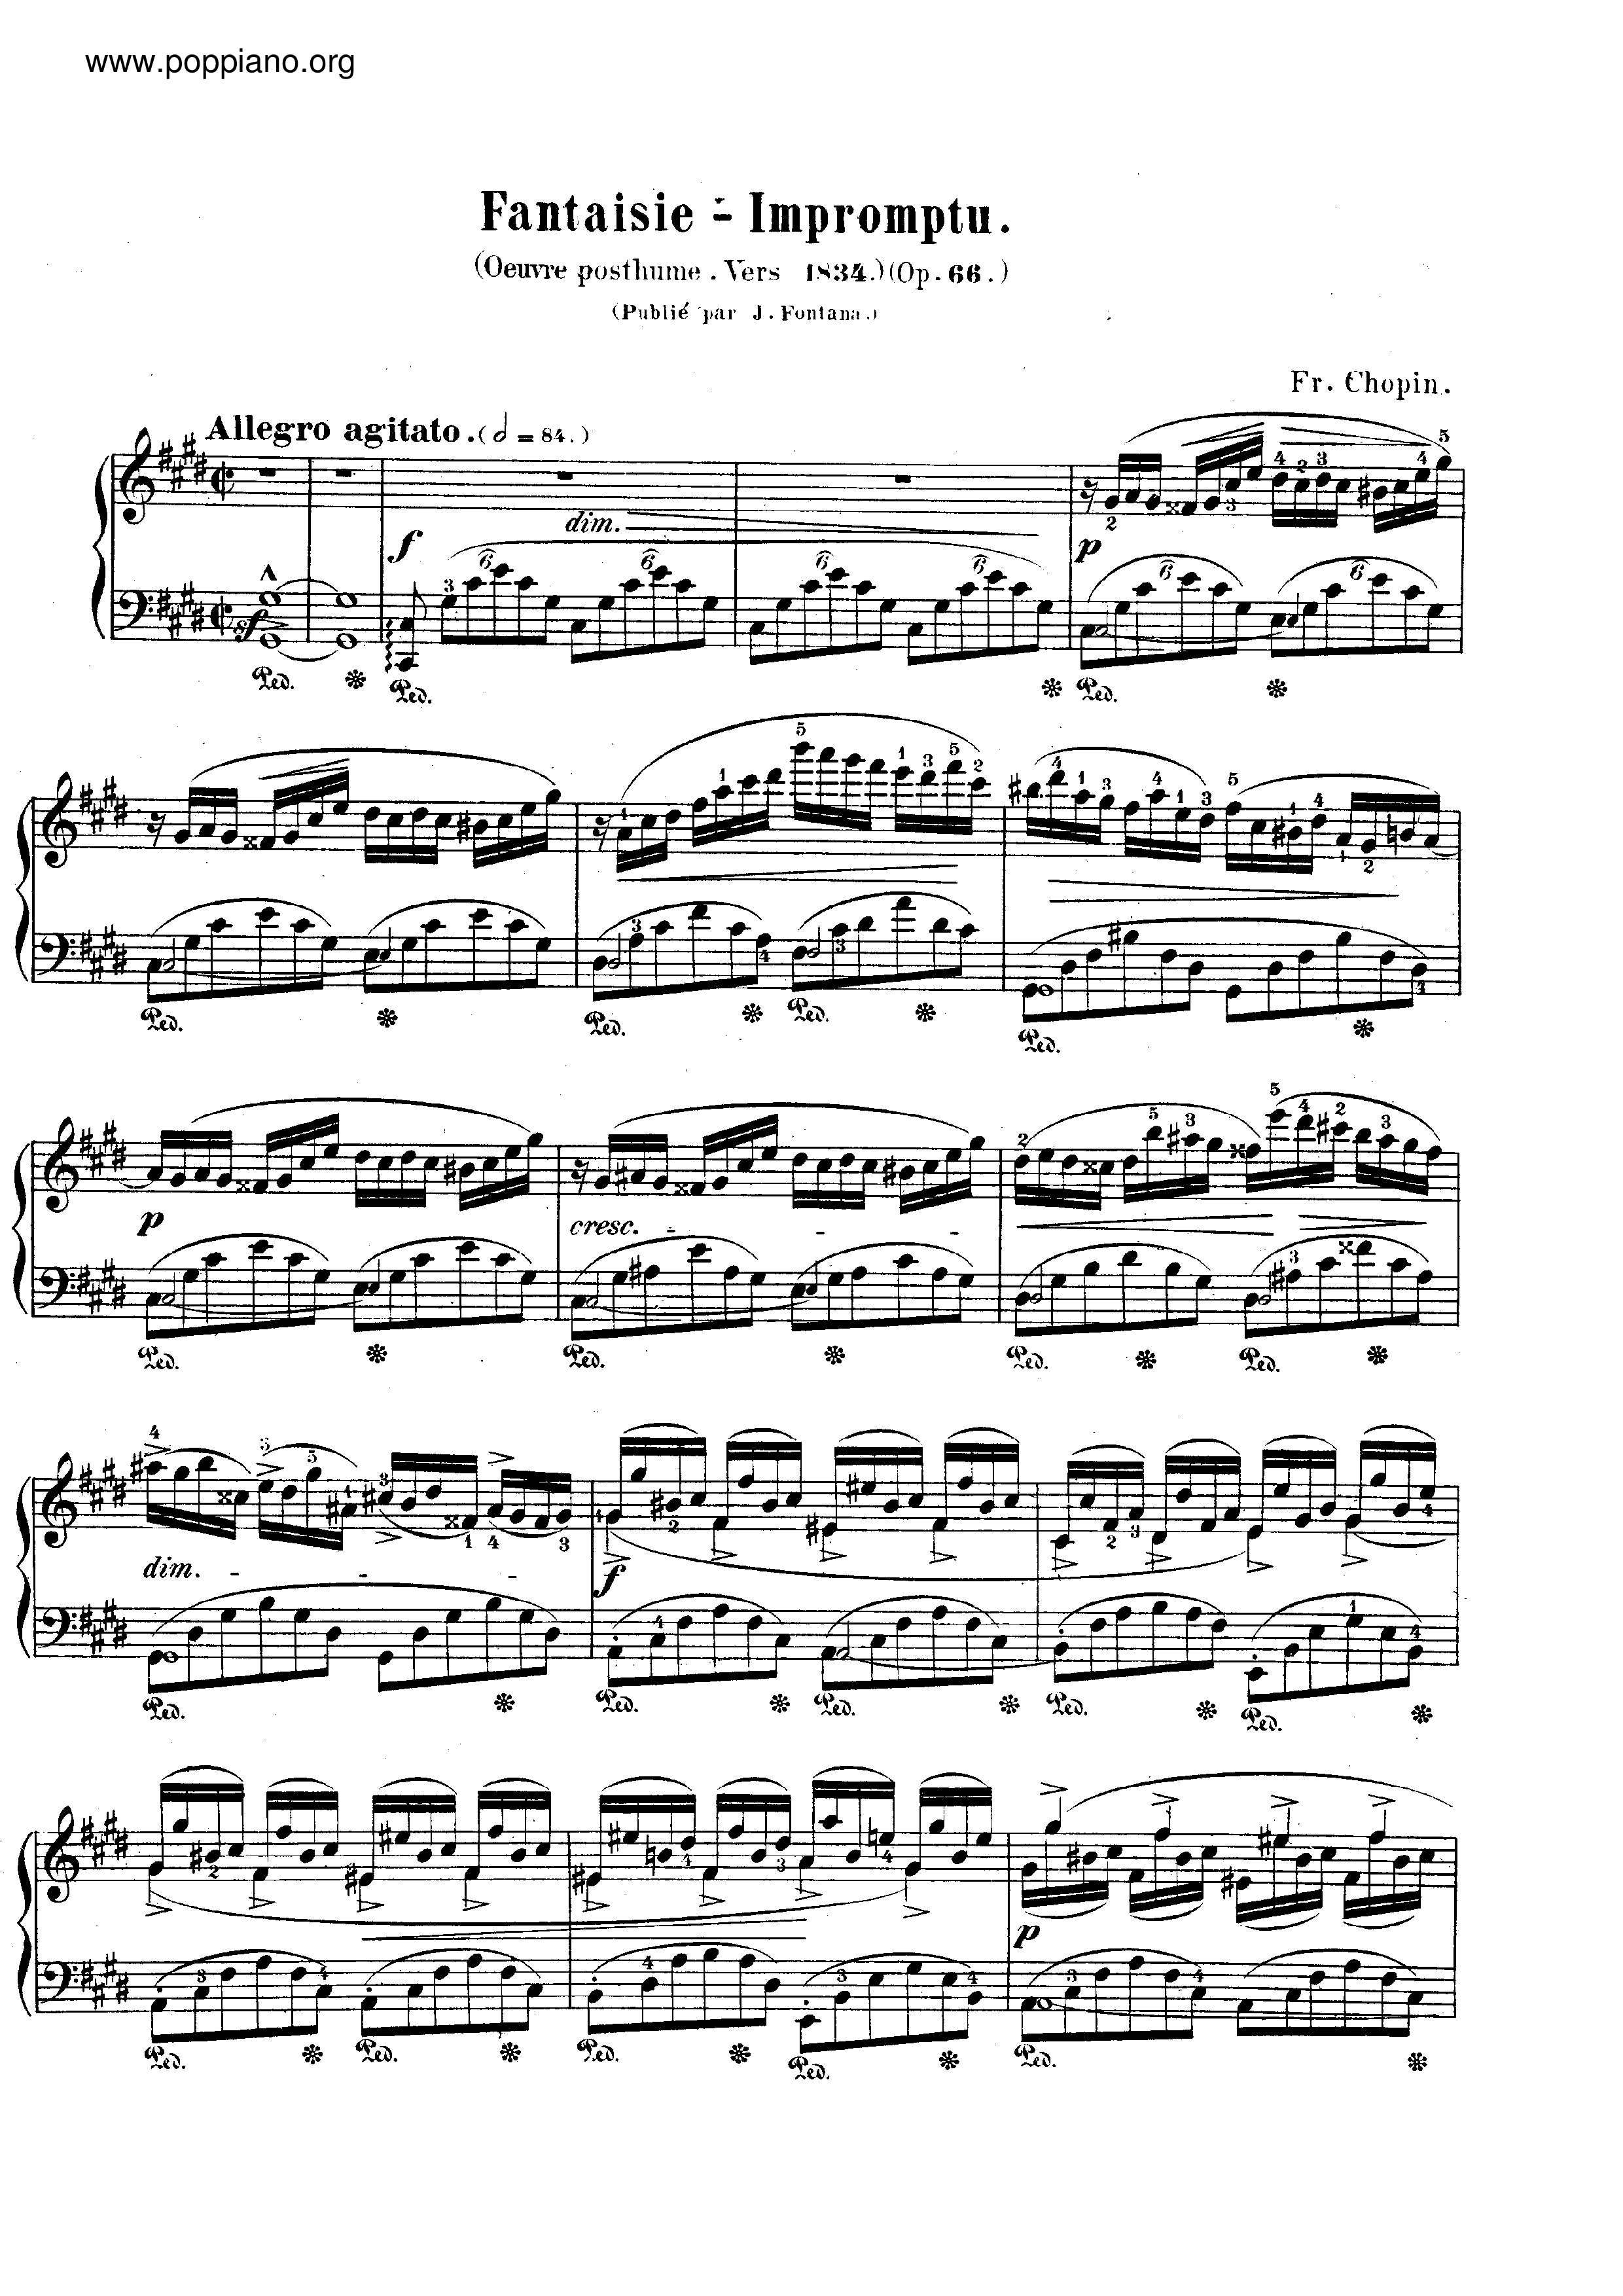 Fantaisie-Impromptu In C-Sharp Minor, Op. 66 Score